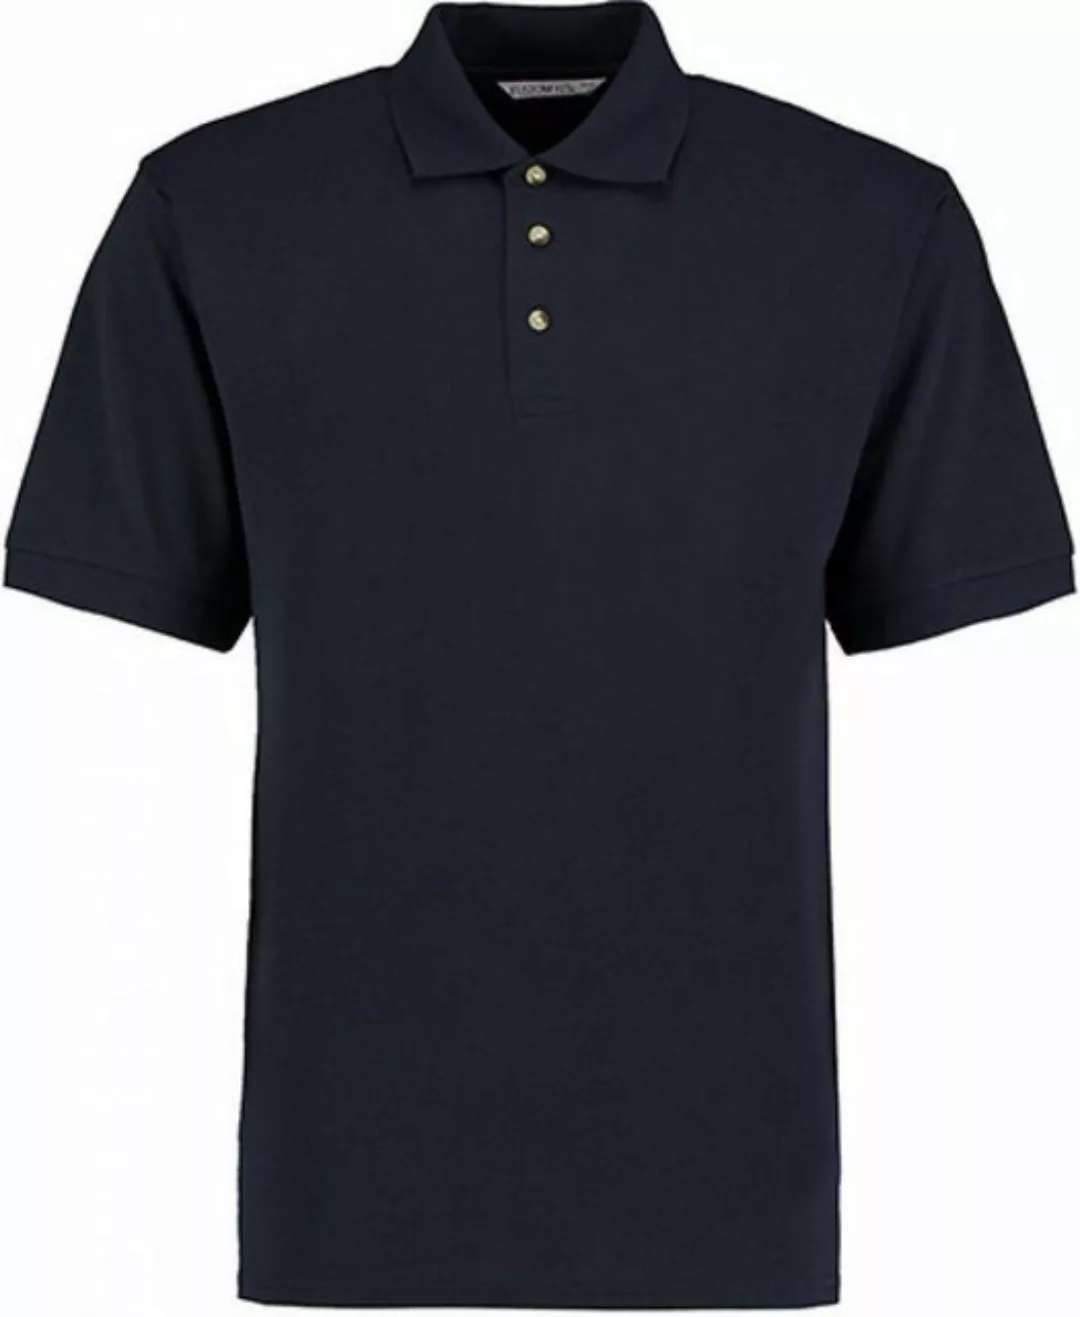 Kustom Kit Poloshirt Chunky Herren Poloshirt - Waschbar bis 60°C günstig online kaufen